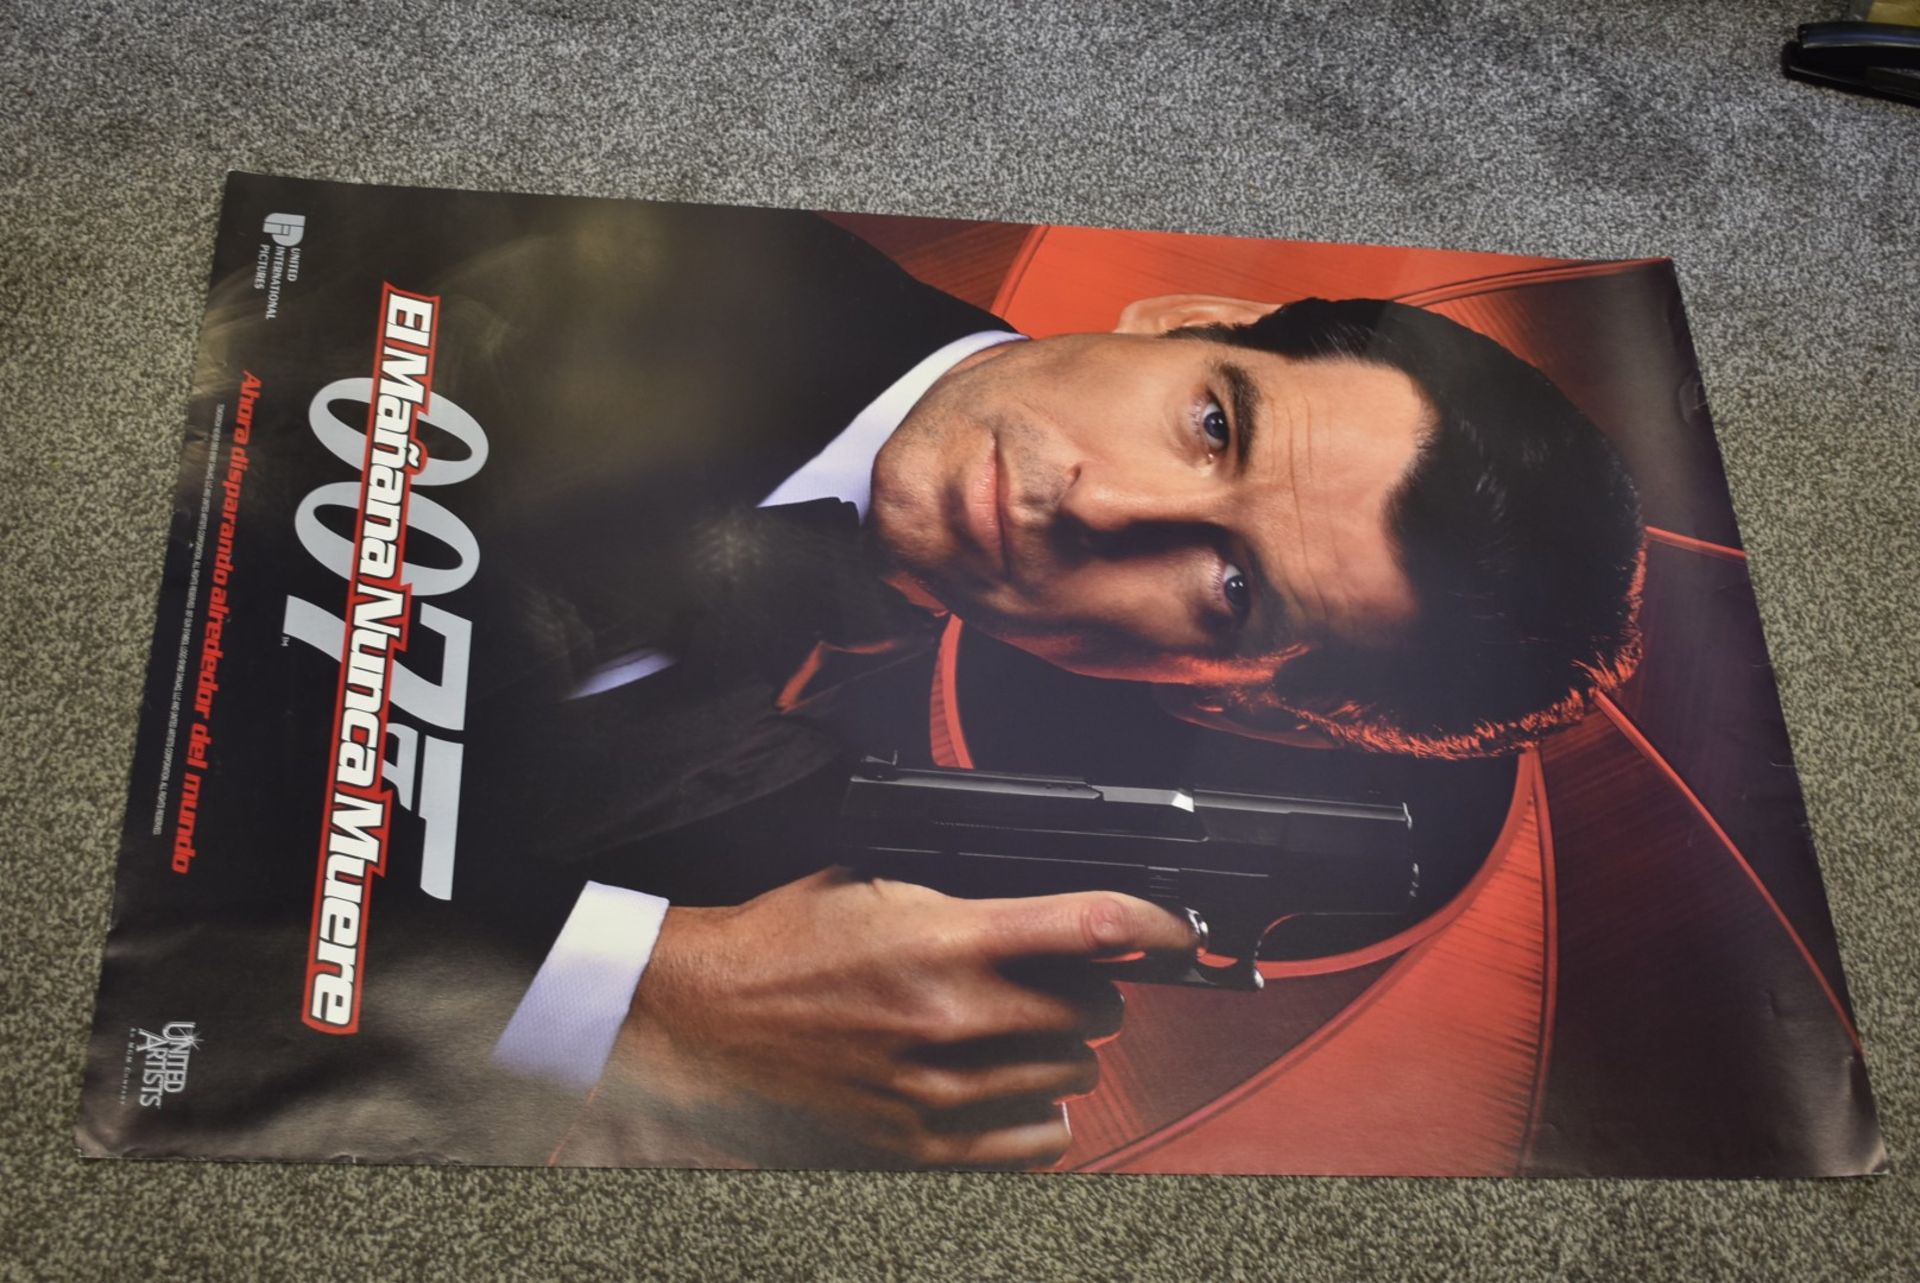 1 x Spanish Double Side Movie Poster - JAMES BOND 007 TOMORROW NEVER DIES - Starring Pierce Brosnan, - Image 6 of 8